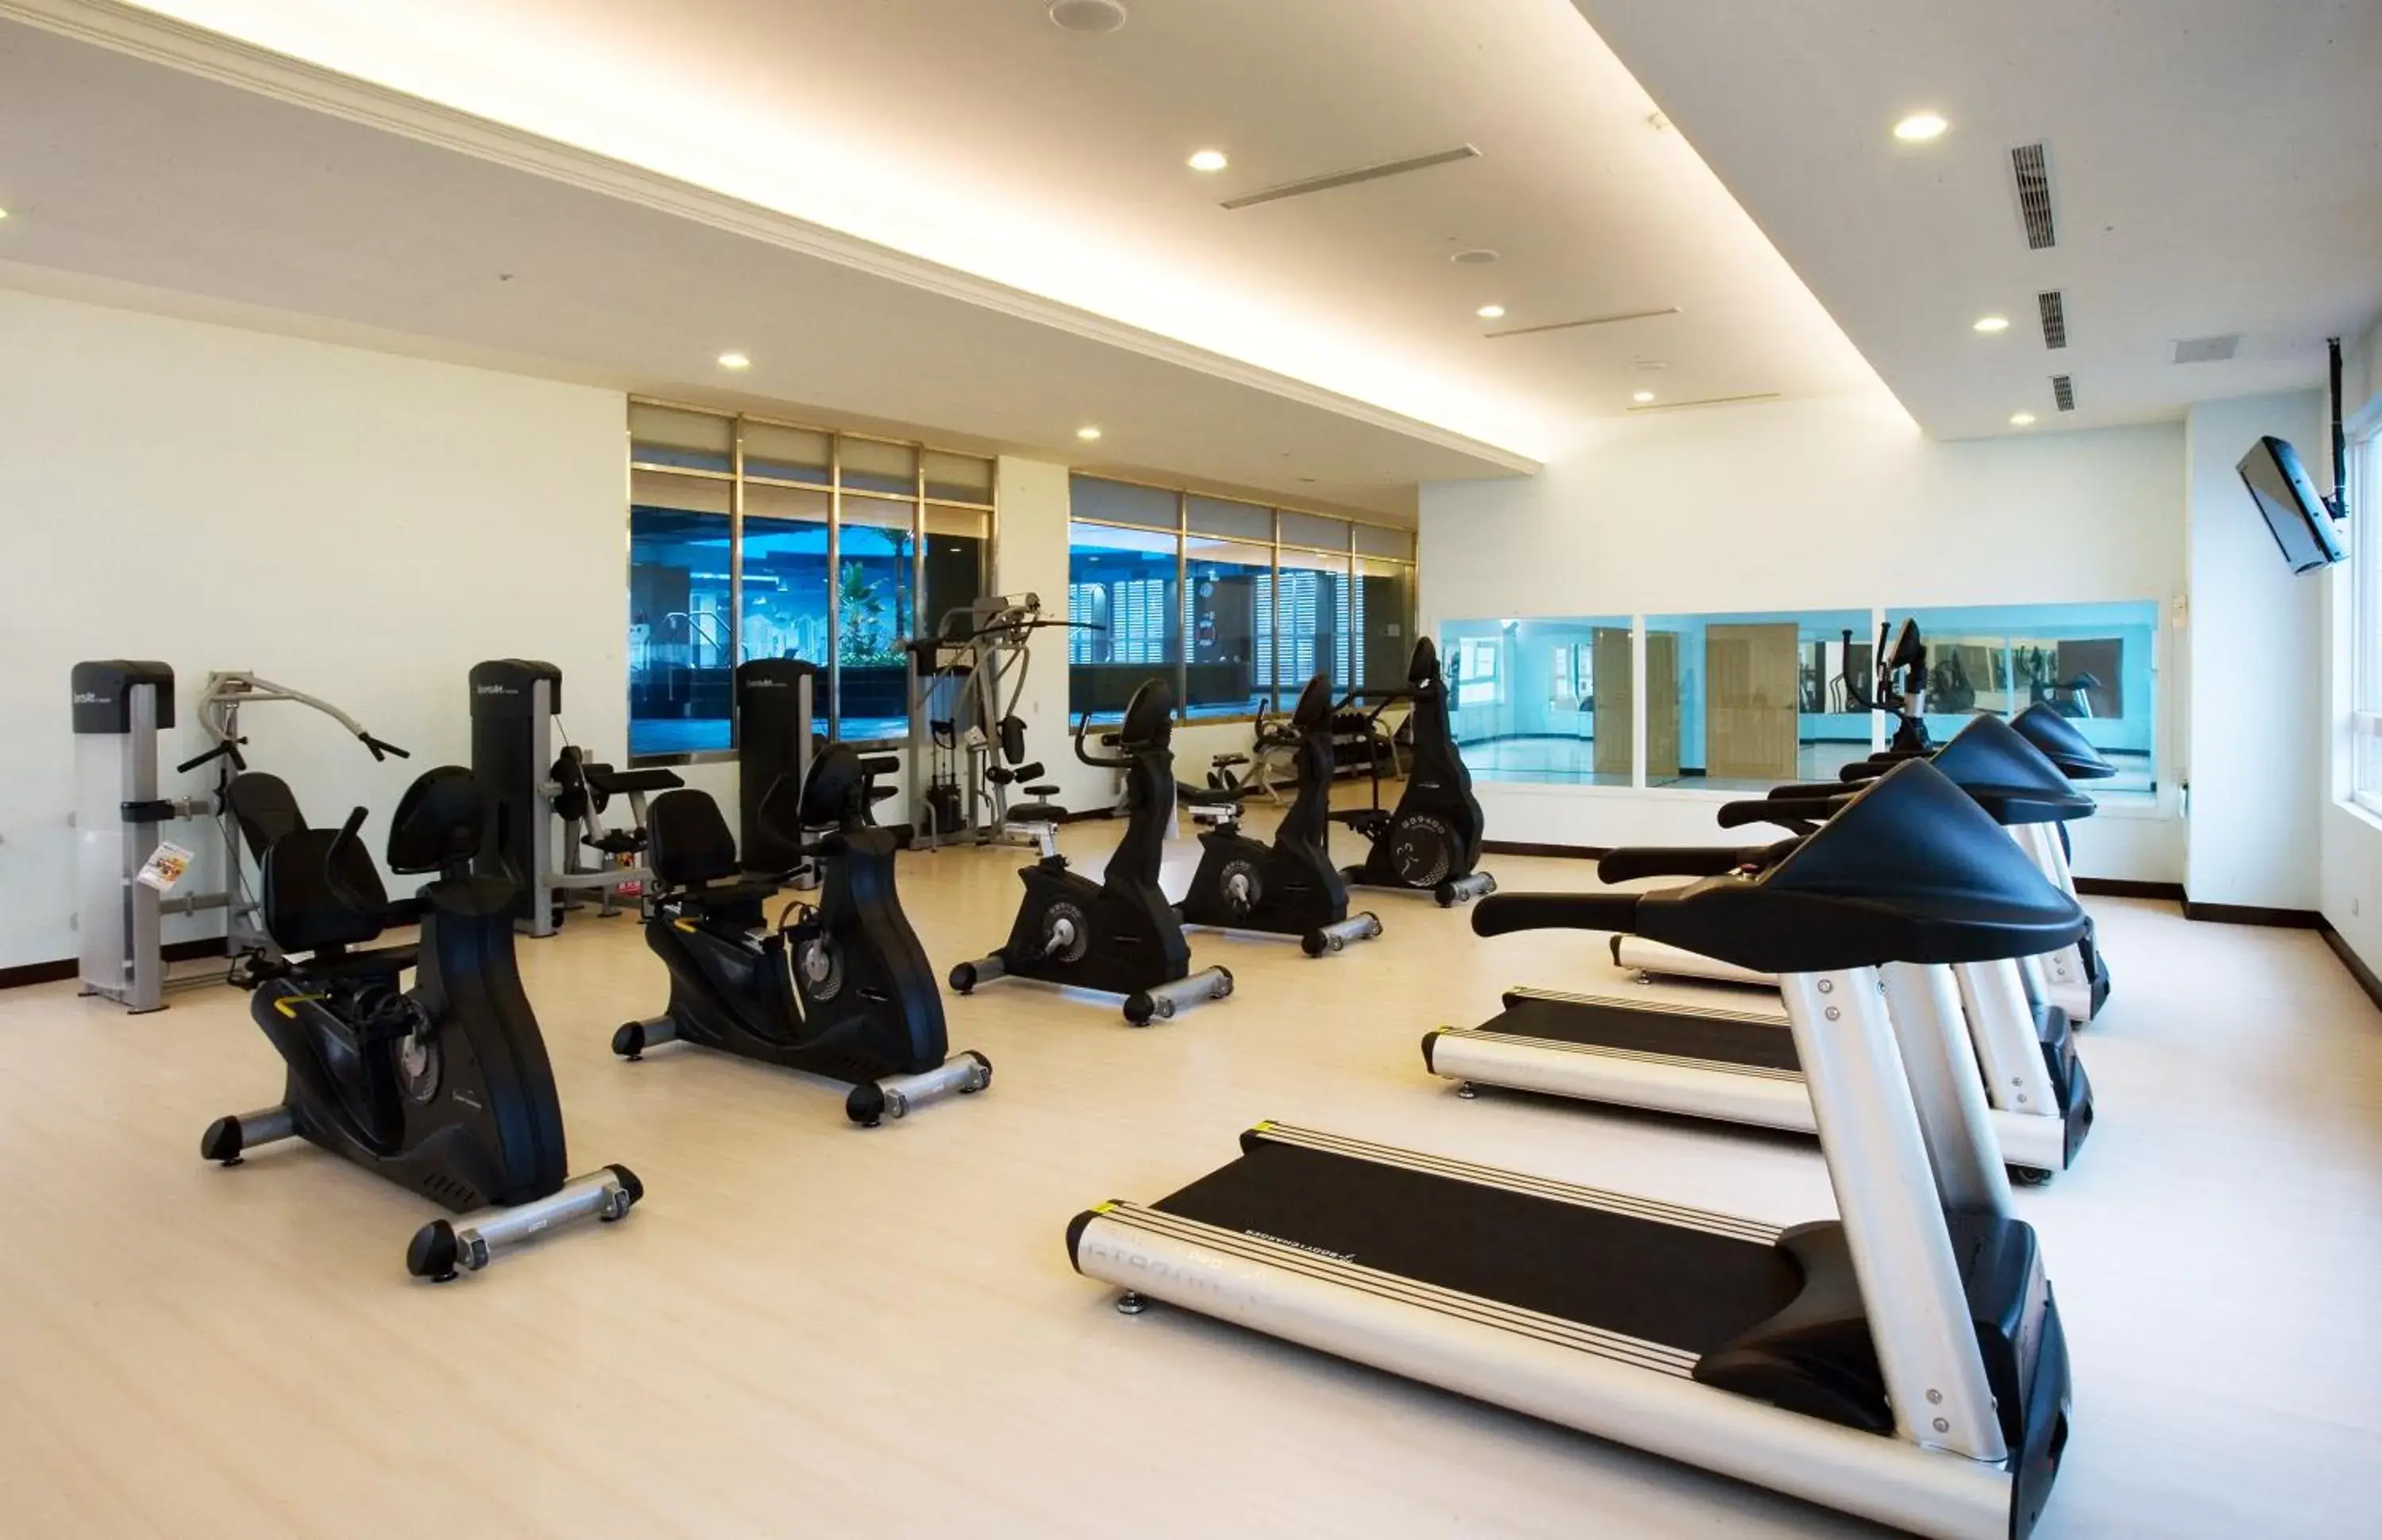 Fitness centre/facilities, Fitness Center/Facilities in Sheraton Taoyuan Hotel